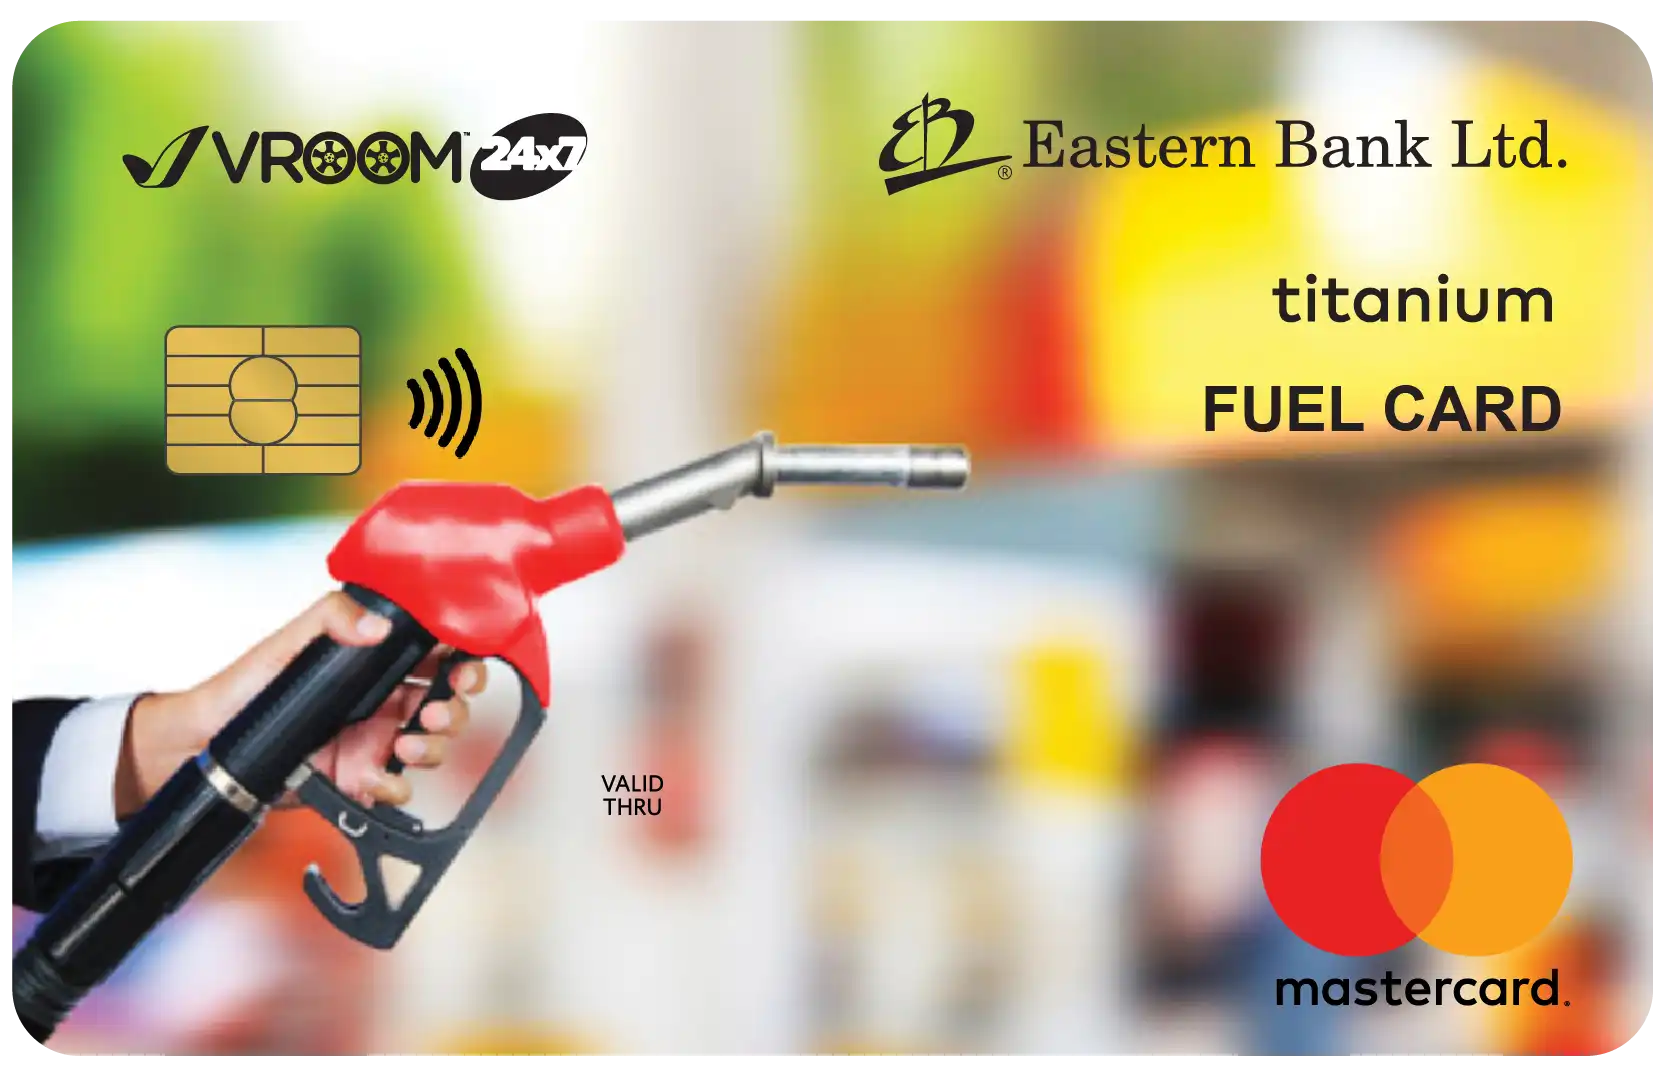 Mastercard Vroom Fuel Card